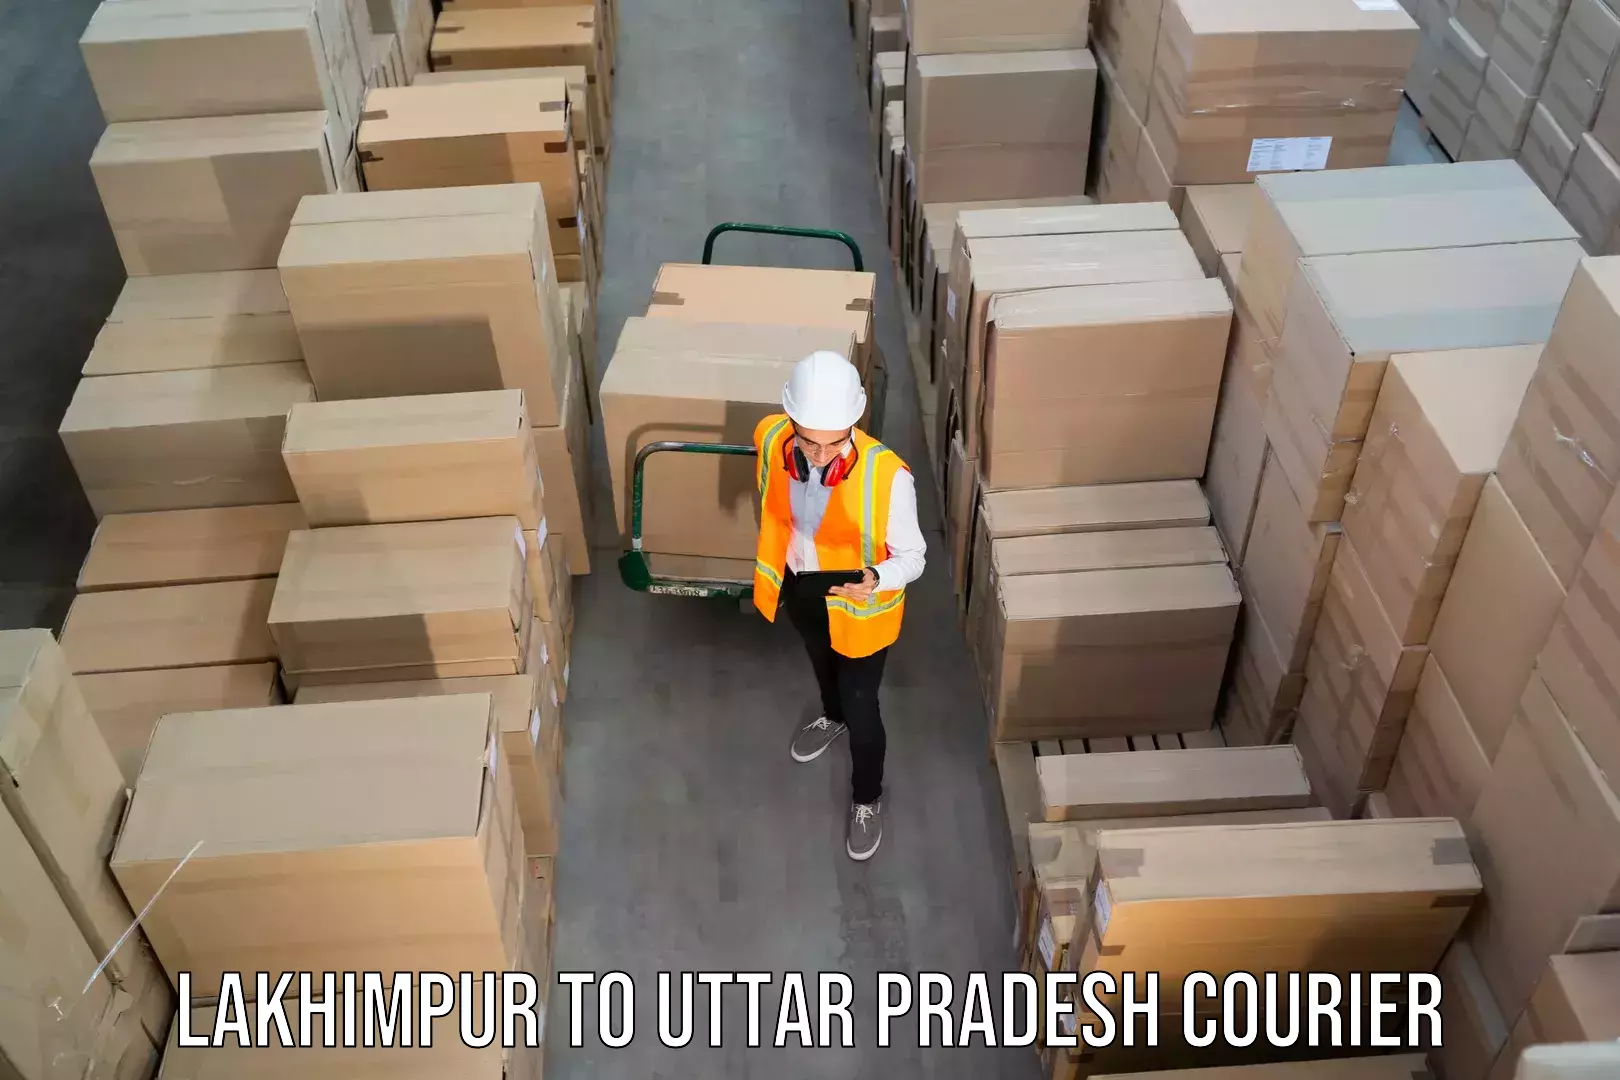 Courier service partnerships Lakhimpur to Mathura